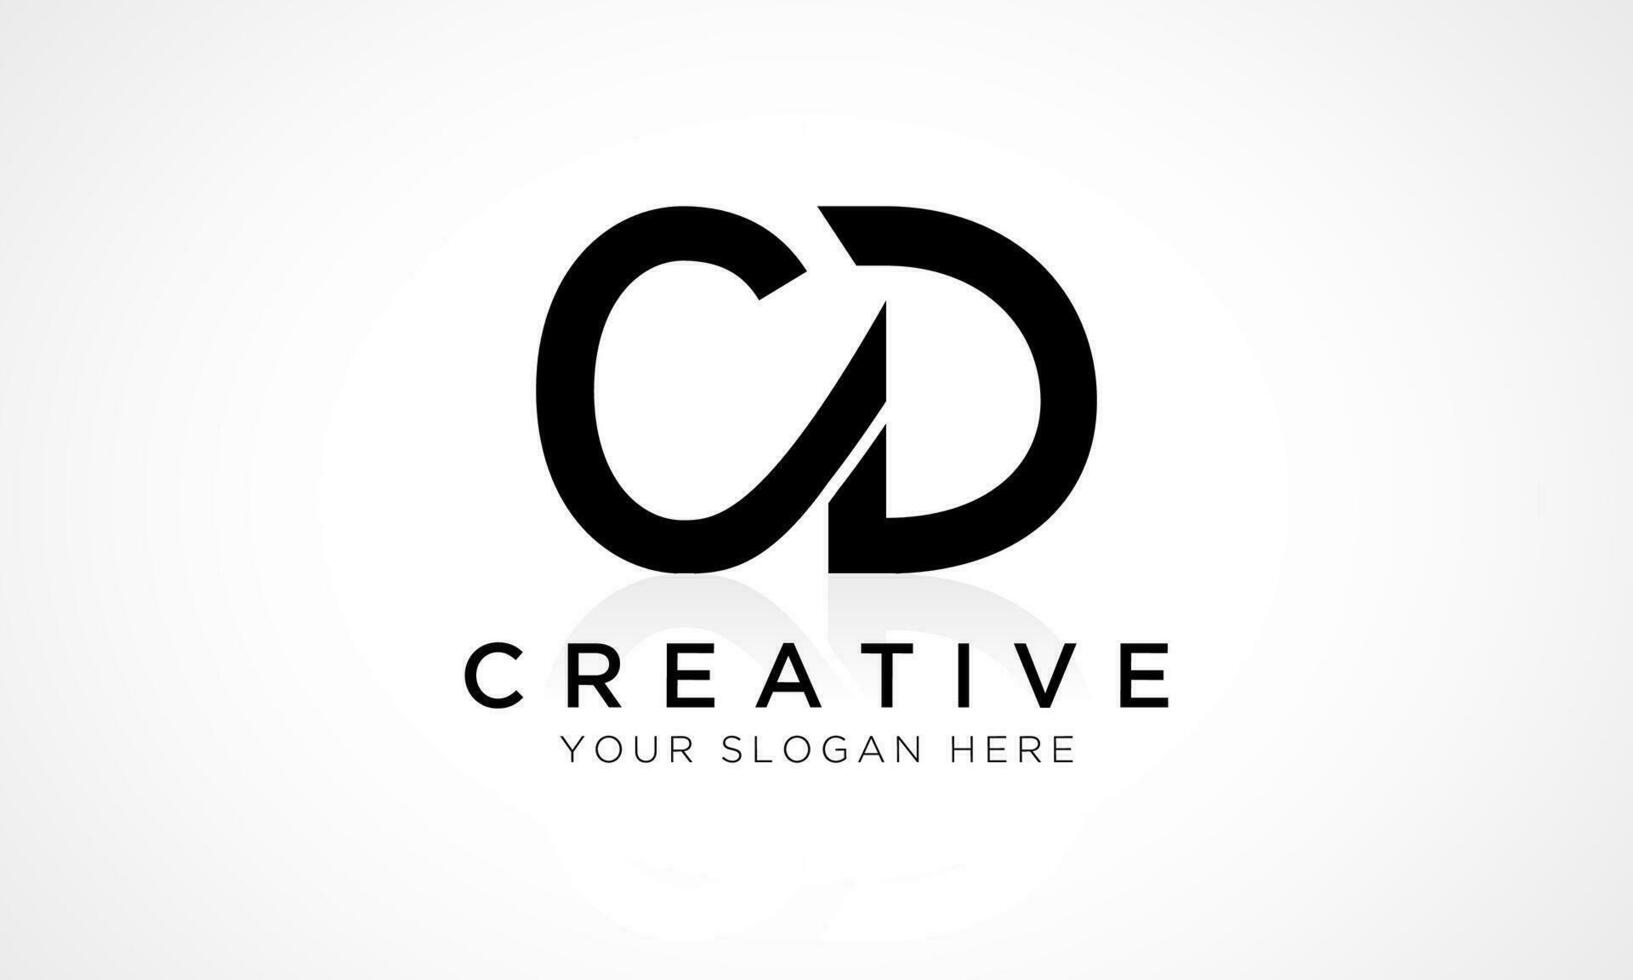 CD Letter Logo Design Vector Template. Alphabet Initial Letter CD Logo Design With Glossy Reflection Business Illustration.